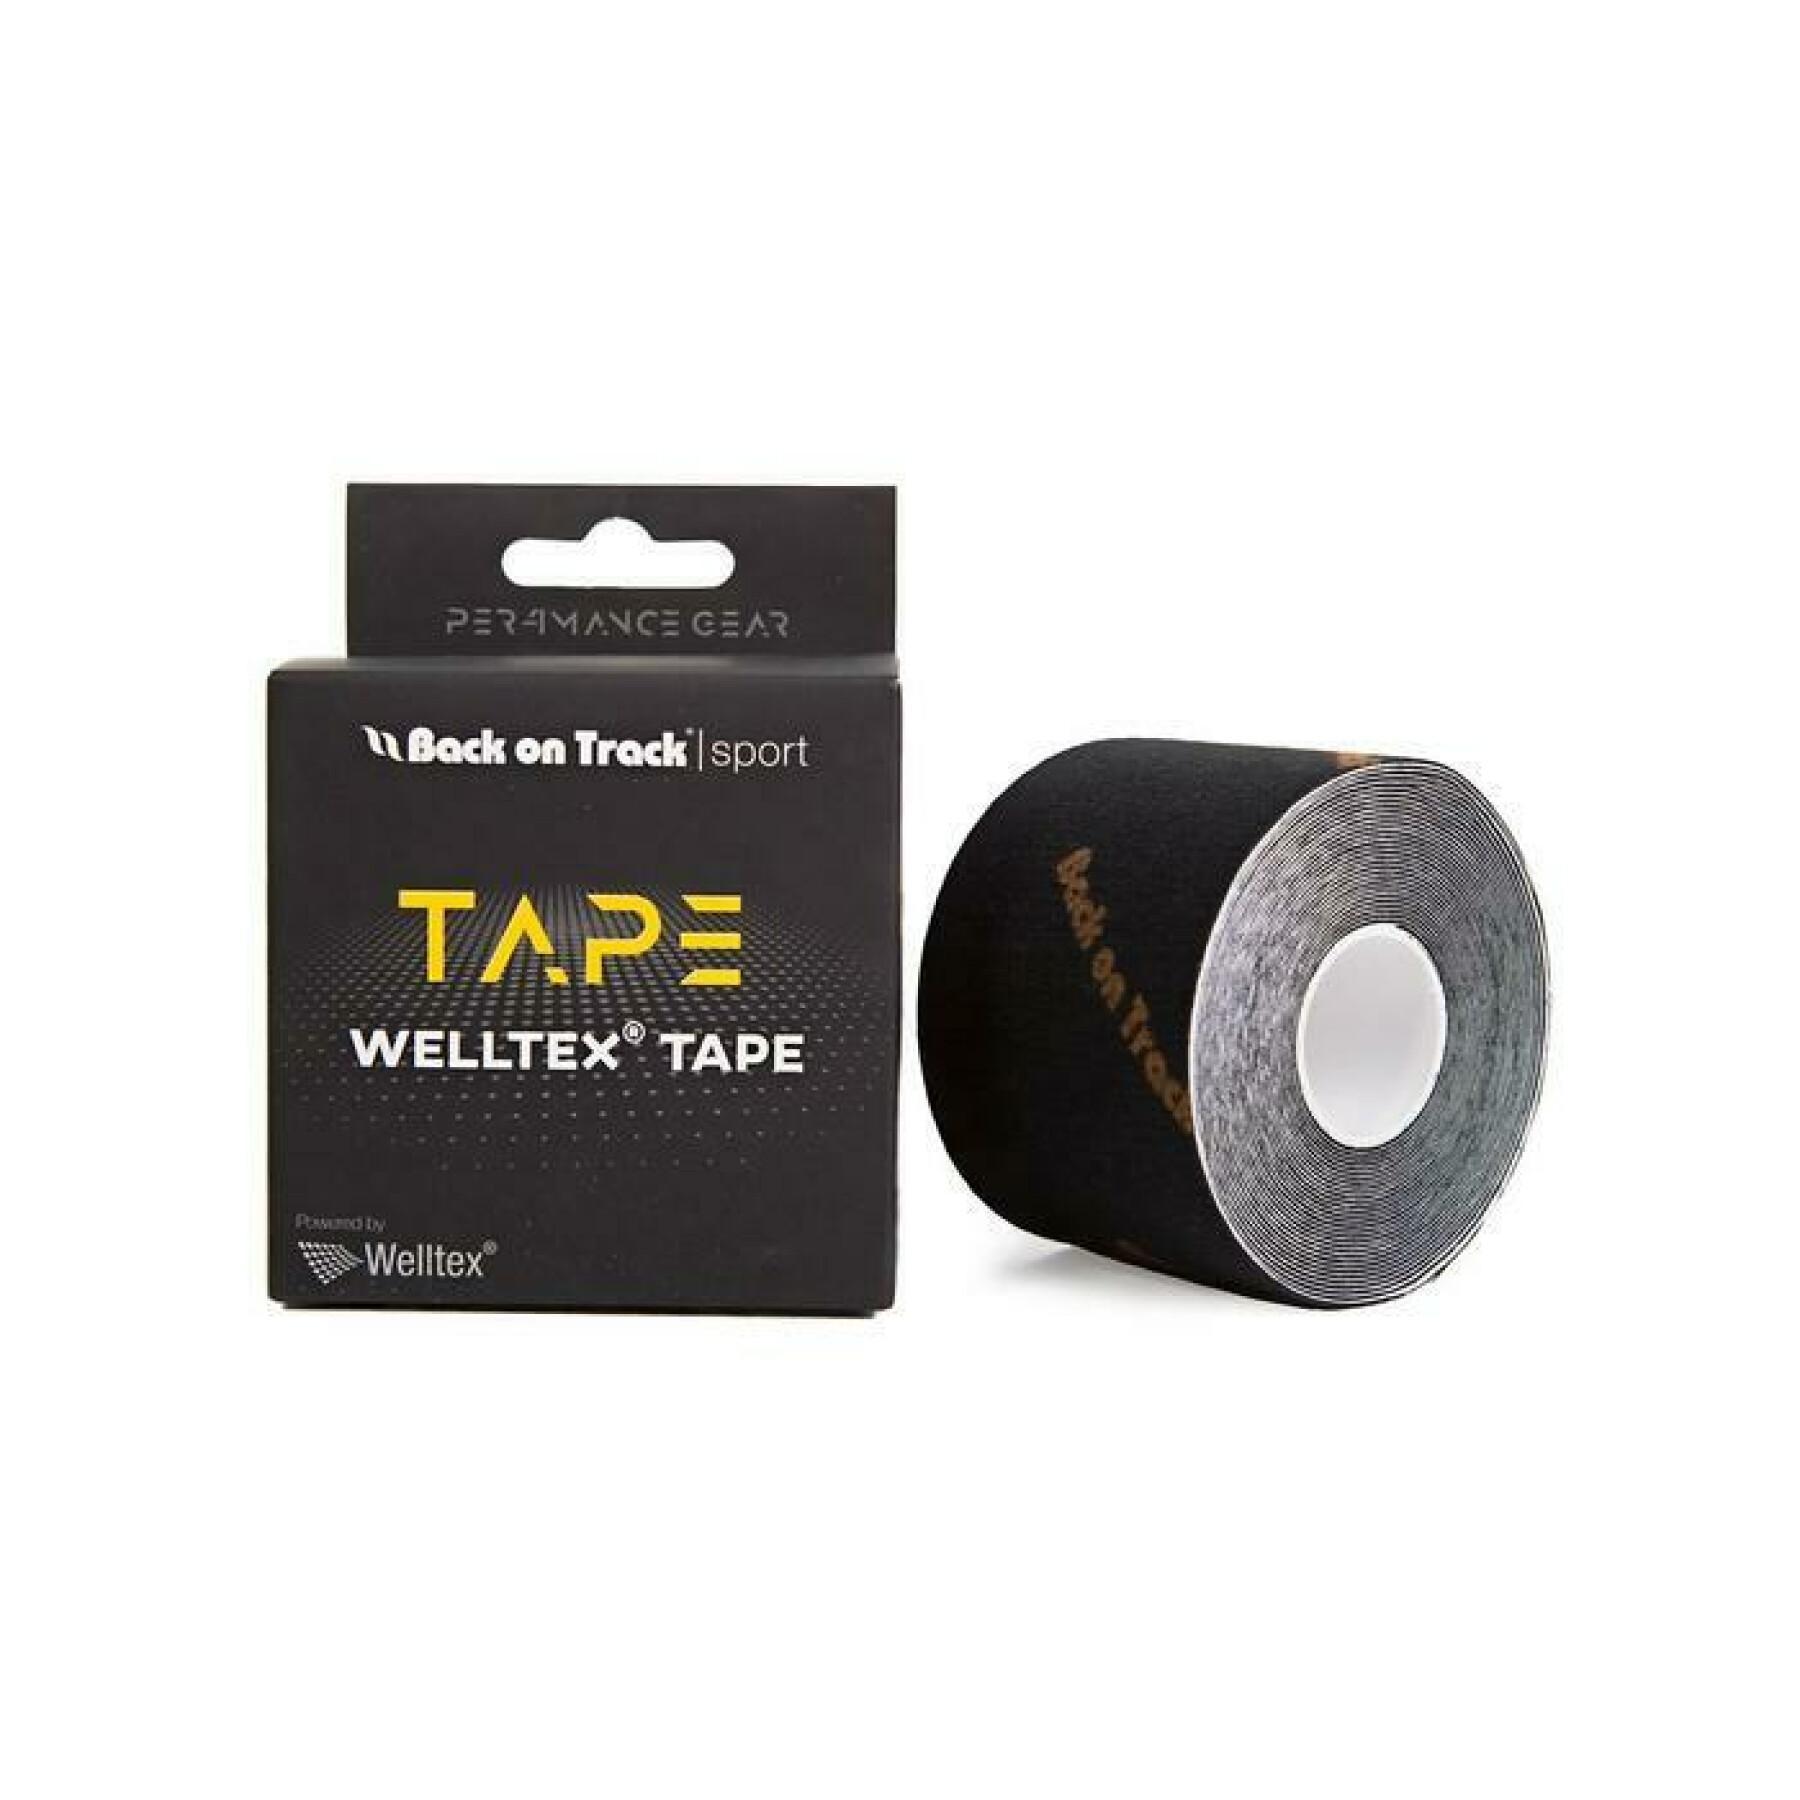 Adhesive tape Back on Track P4G Welltex Tape